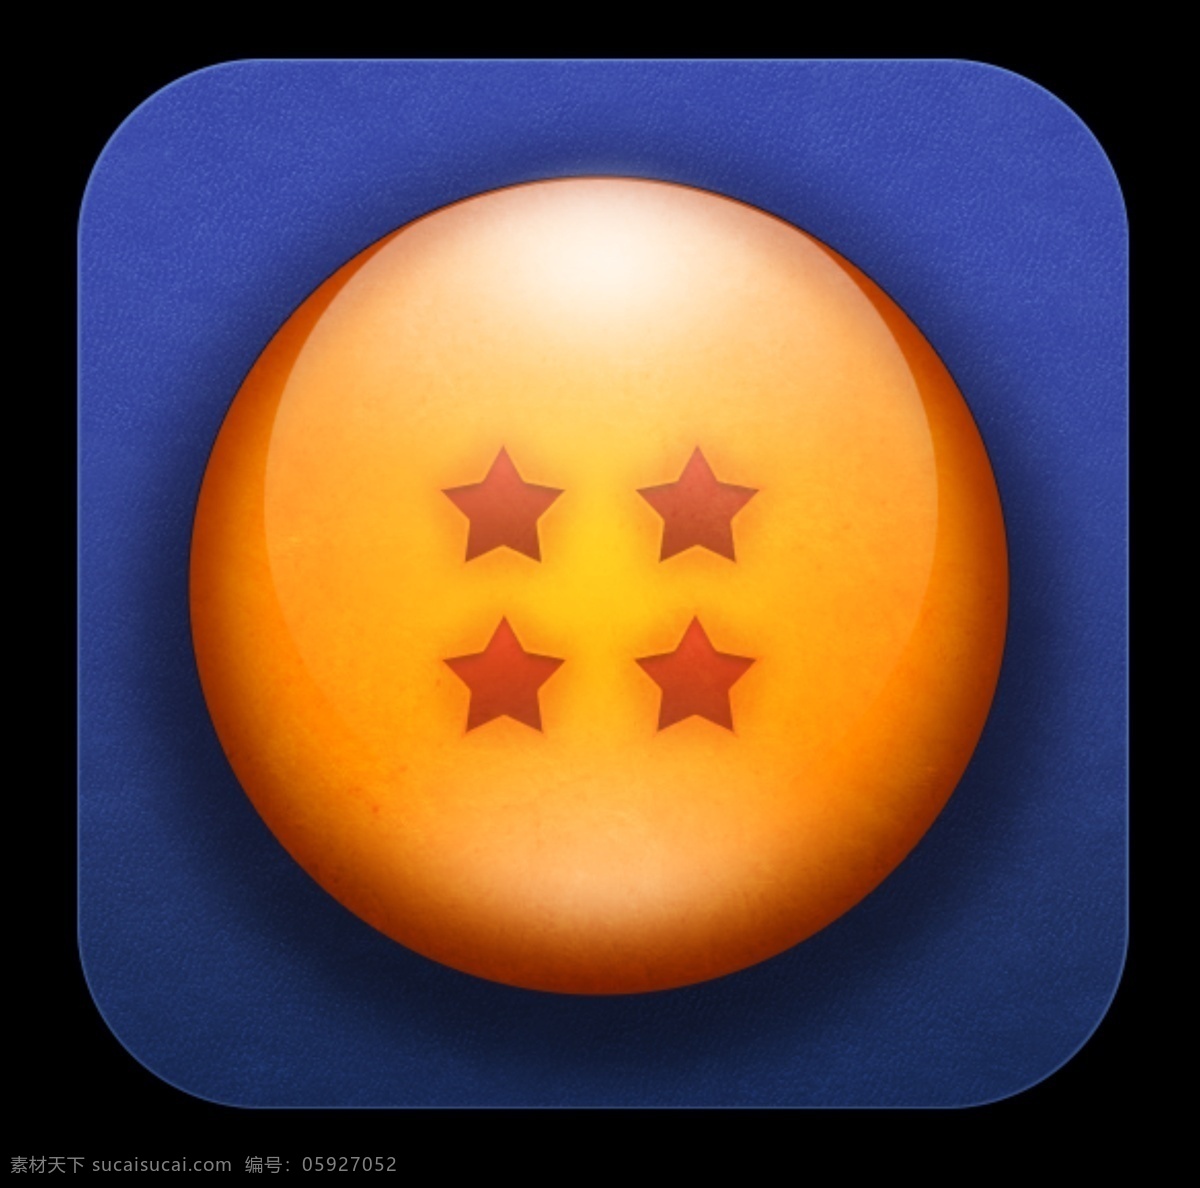 橙色 星星 图标 按钮 图标设计 icon icon设计 icon图标 网页图标 星星图标社交 圆角按钮图标 圆角按钮